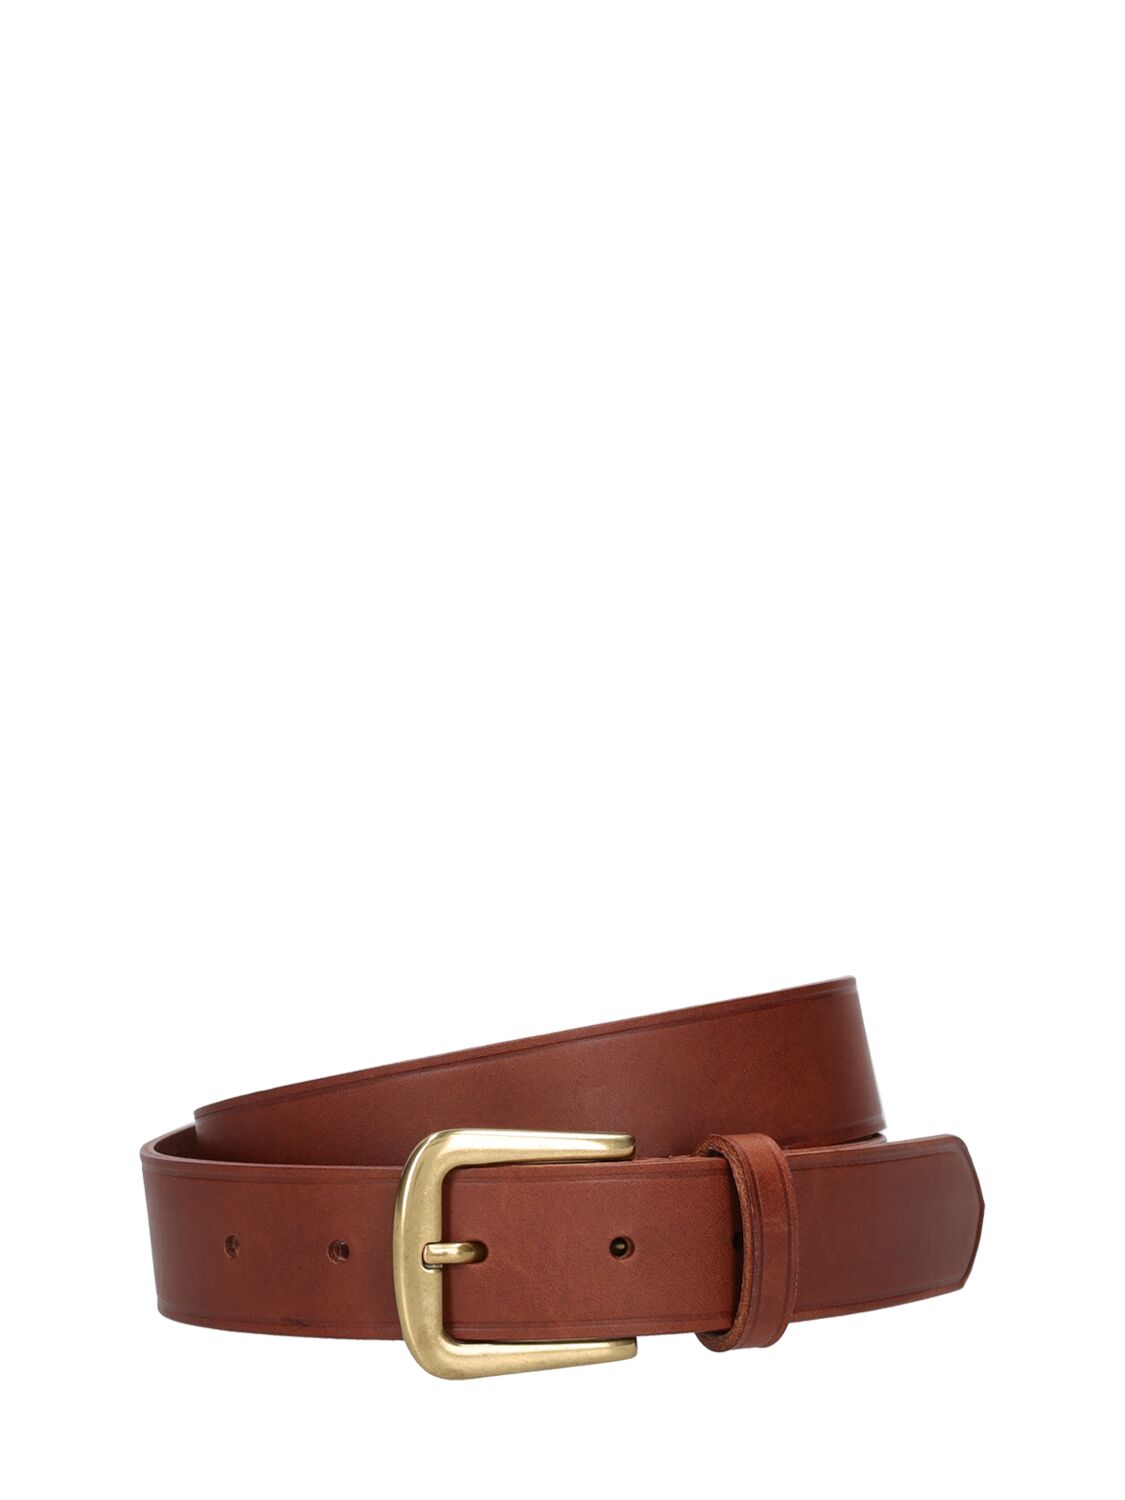 Image of Cafe Leather Belt